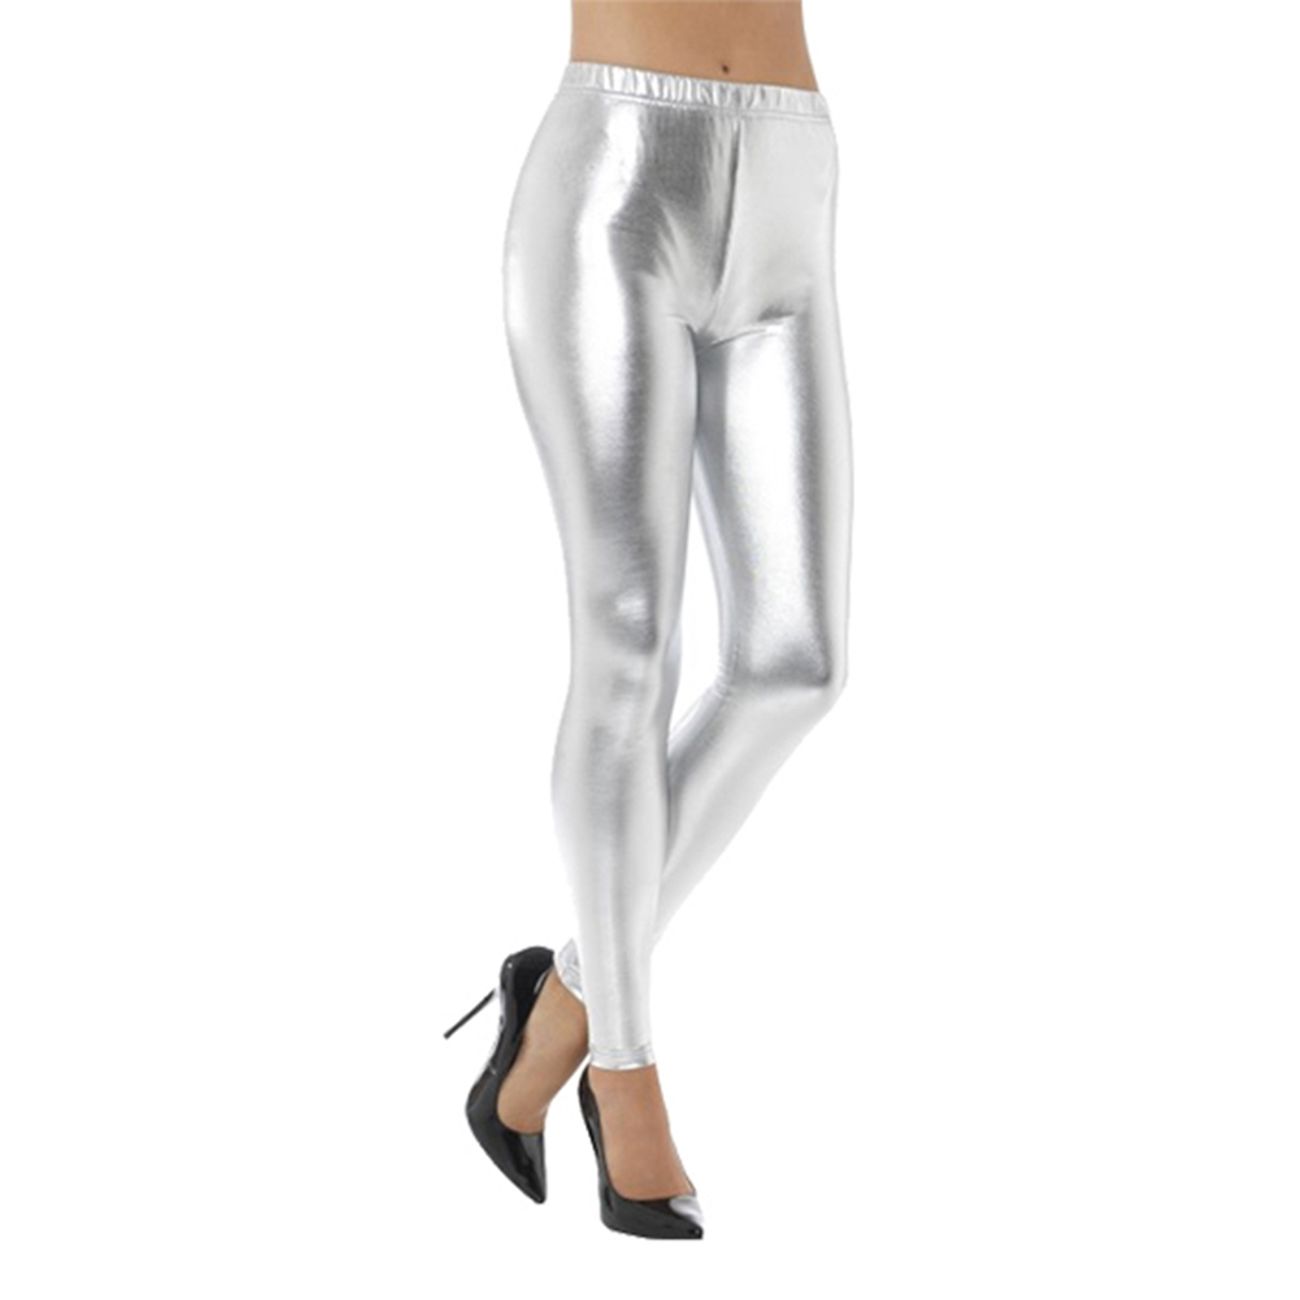 80-tals-metallic-disco-leggings-silver-41014-2